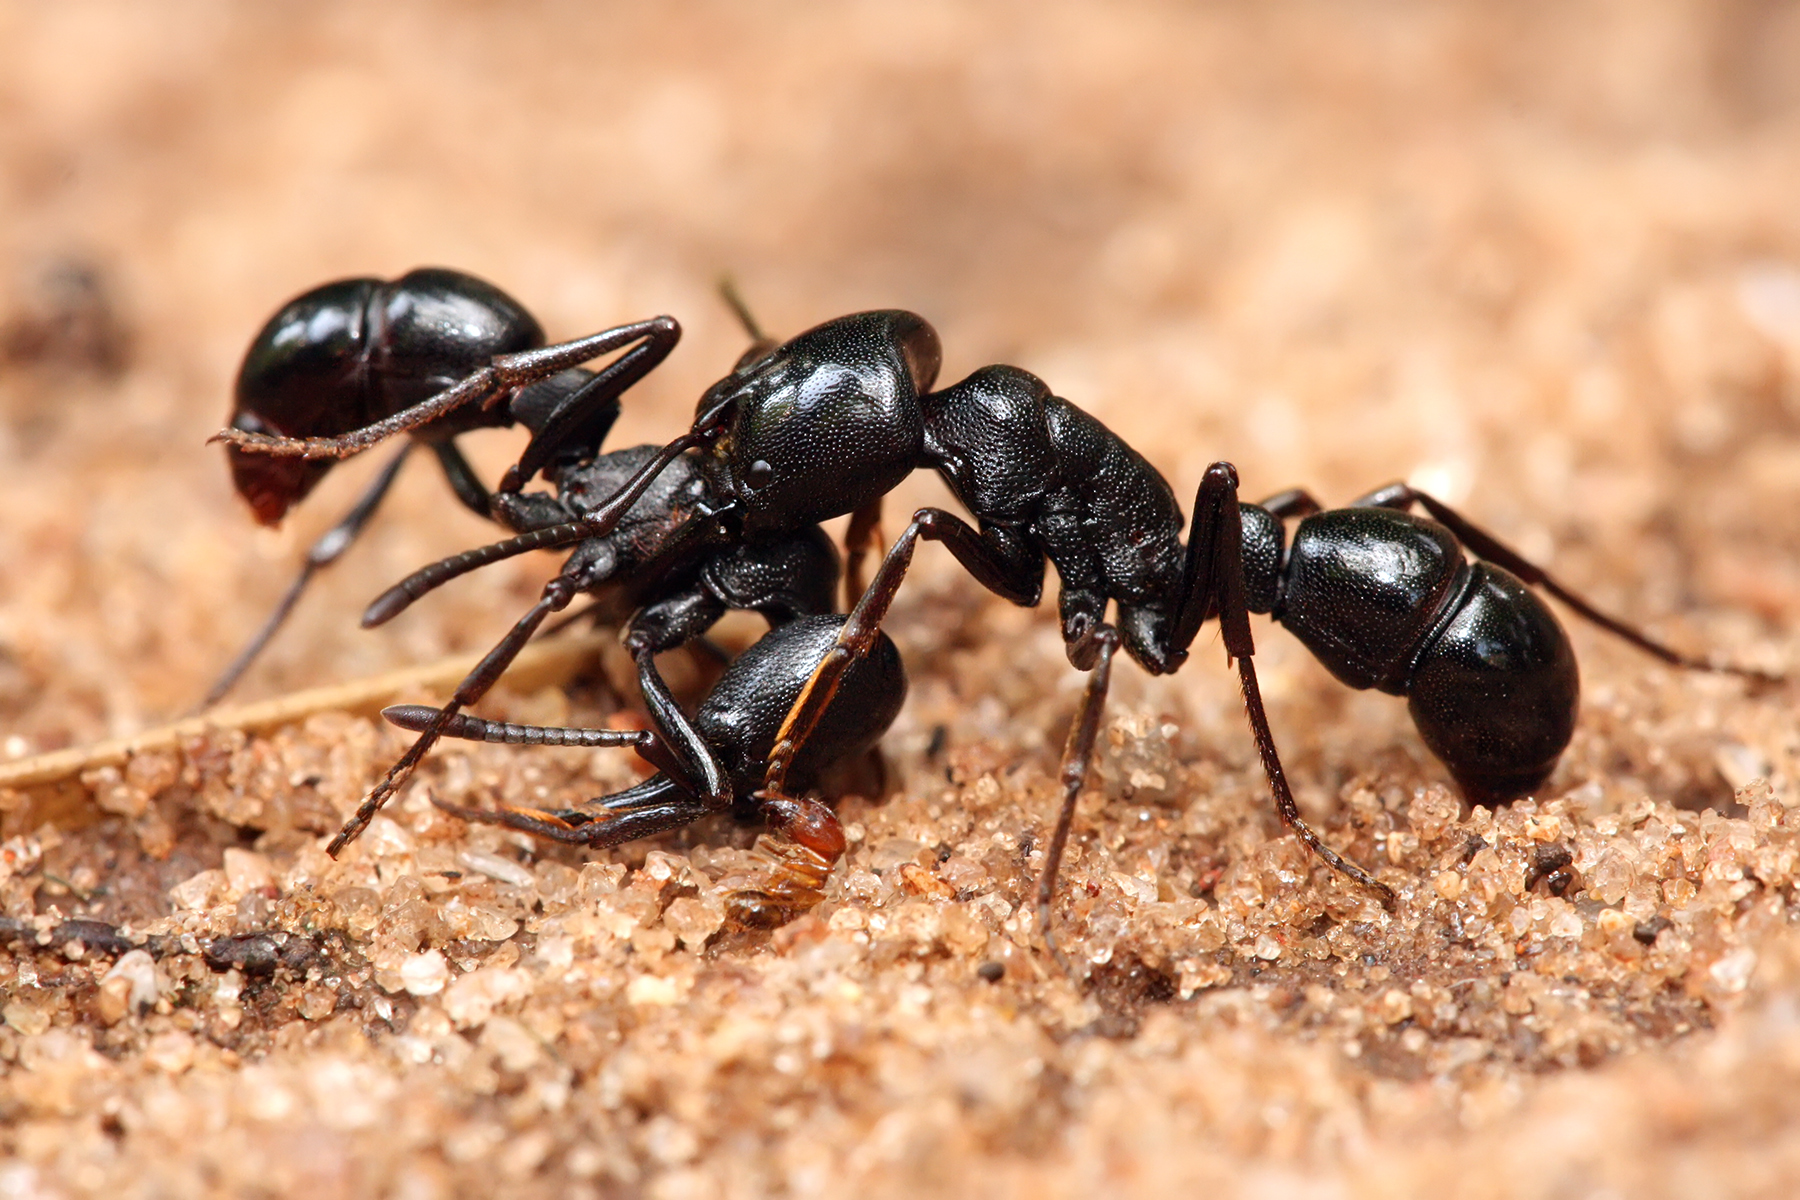 Plectroctena sp ants